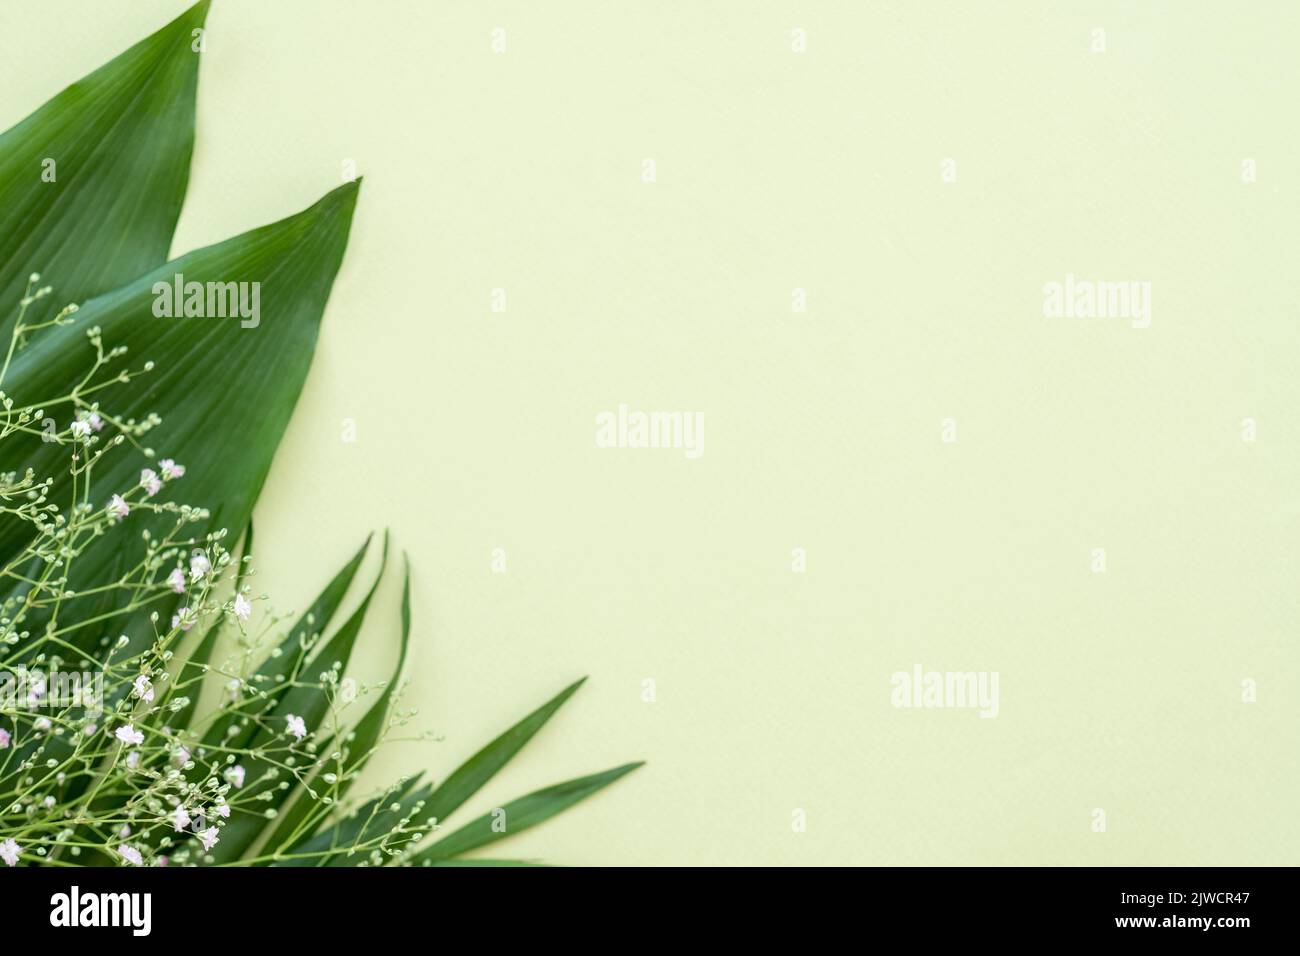 green leaf background natural decor lush foliage Stock Photo